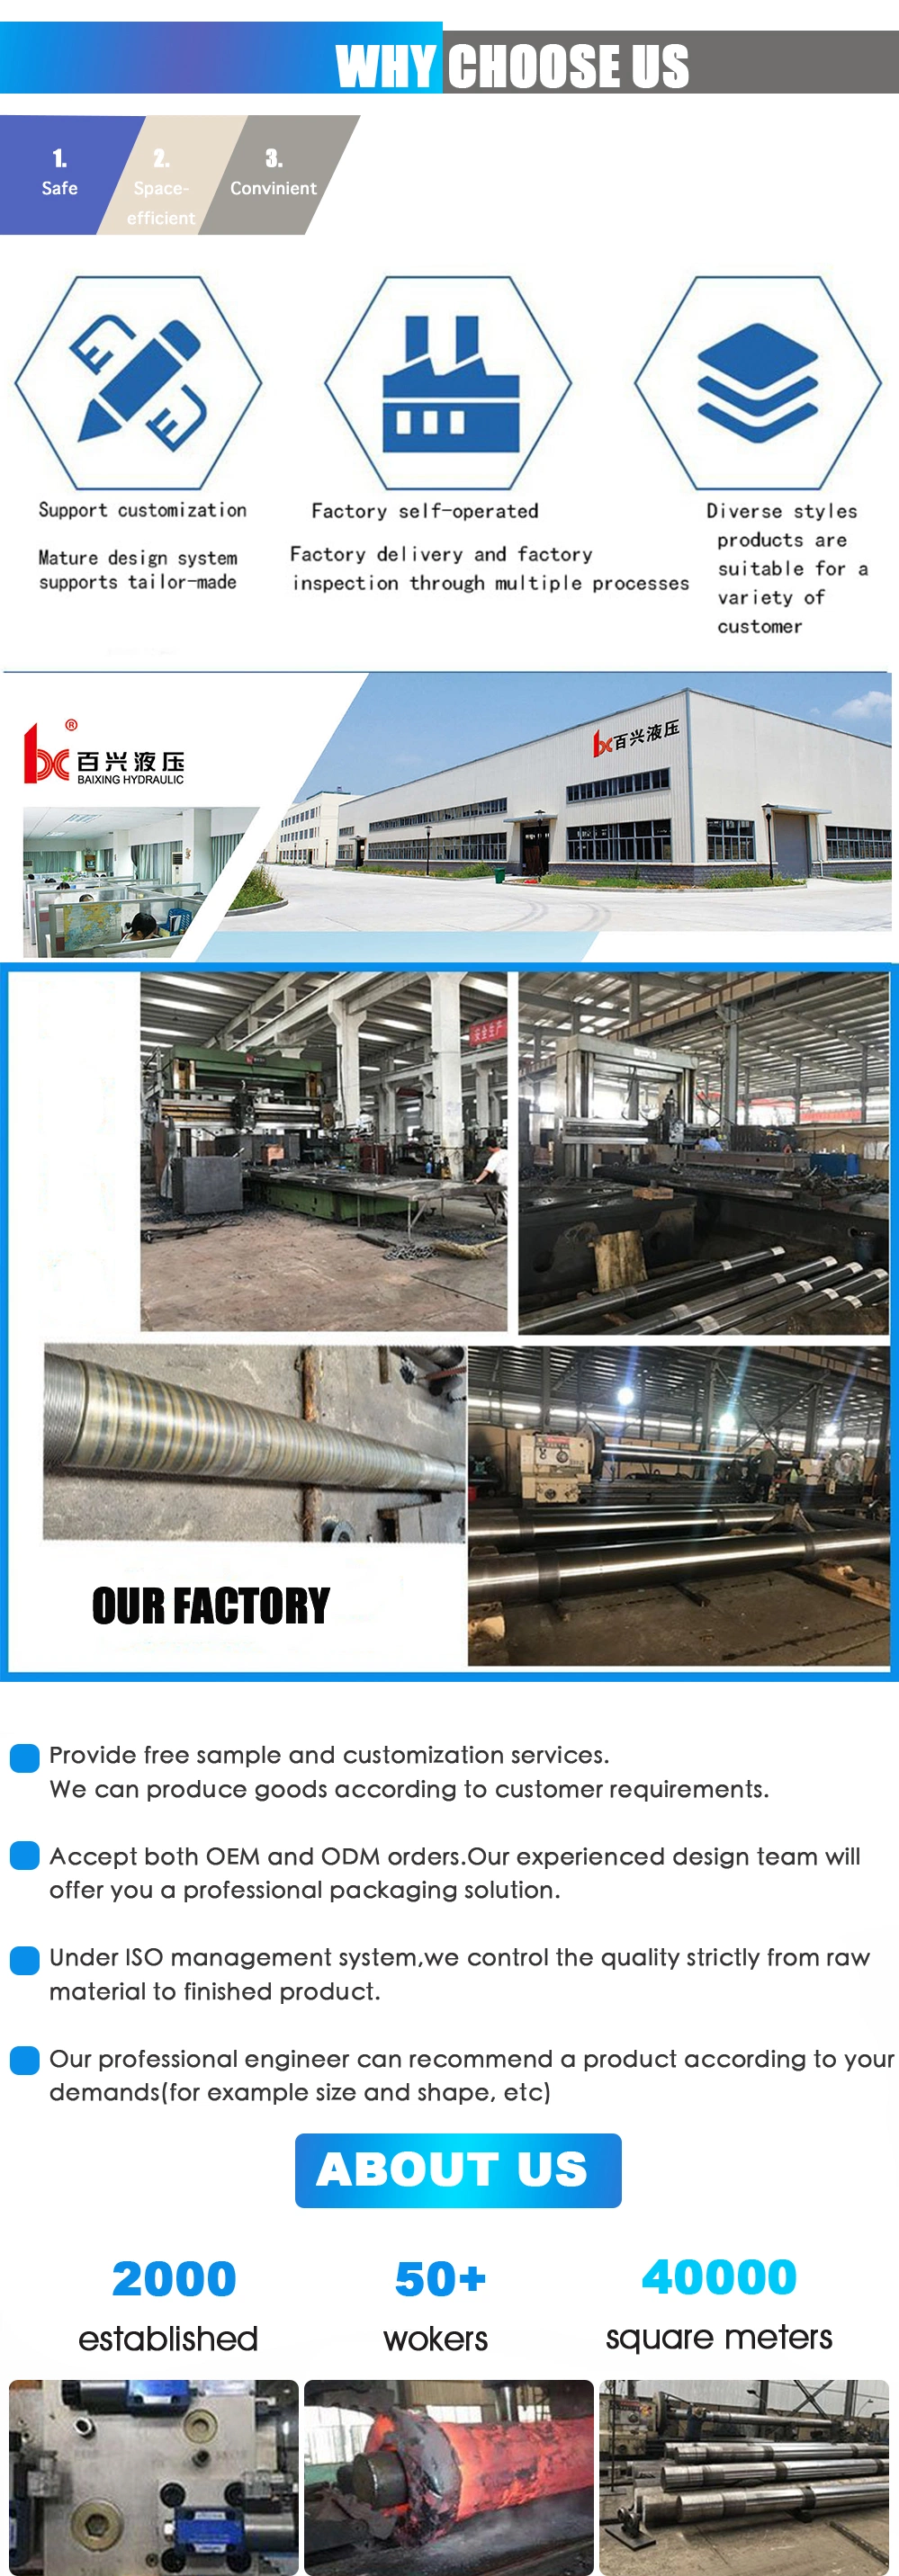 Hydraulic Press Customized Automatic CNC Hydraulic Press Machine 500 Tons Fish Bait Forming Molding Manufacturer Powder